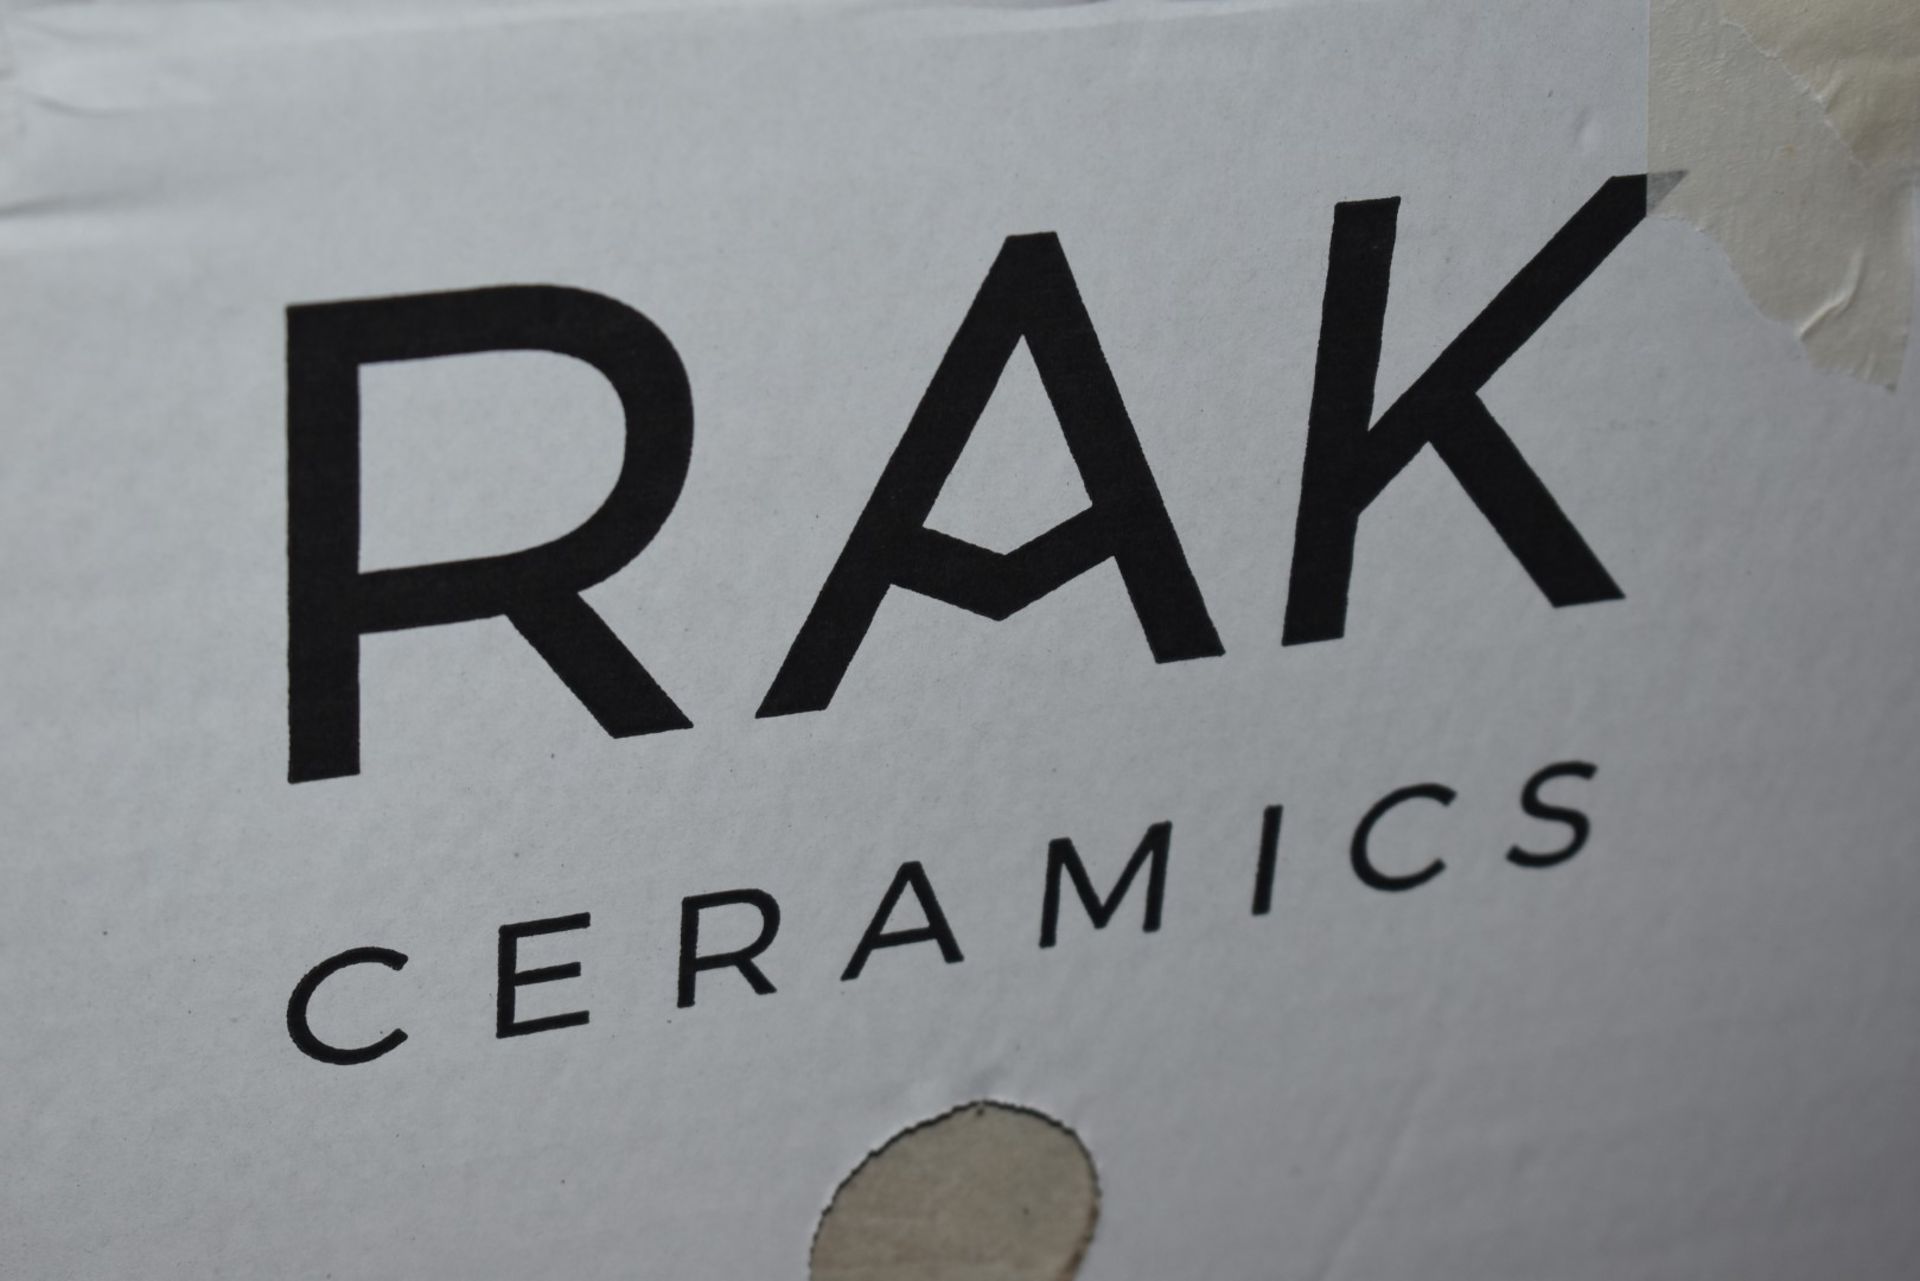 6 x Boxes of RAK Porcelain Floor or Wall Tiles - Capital Wood in Natural Oak - 29.5 x 120 cm - Image 2 of 3